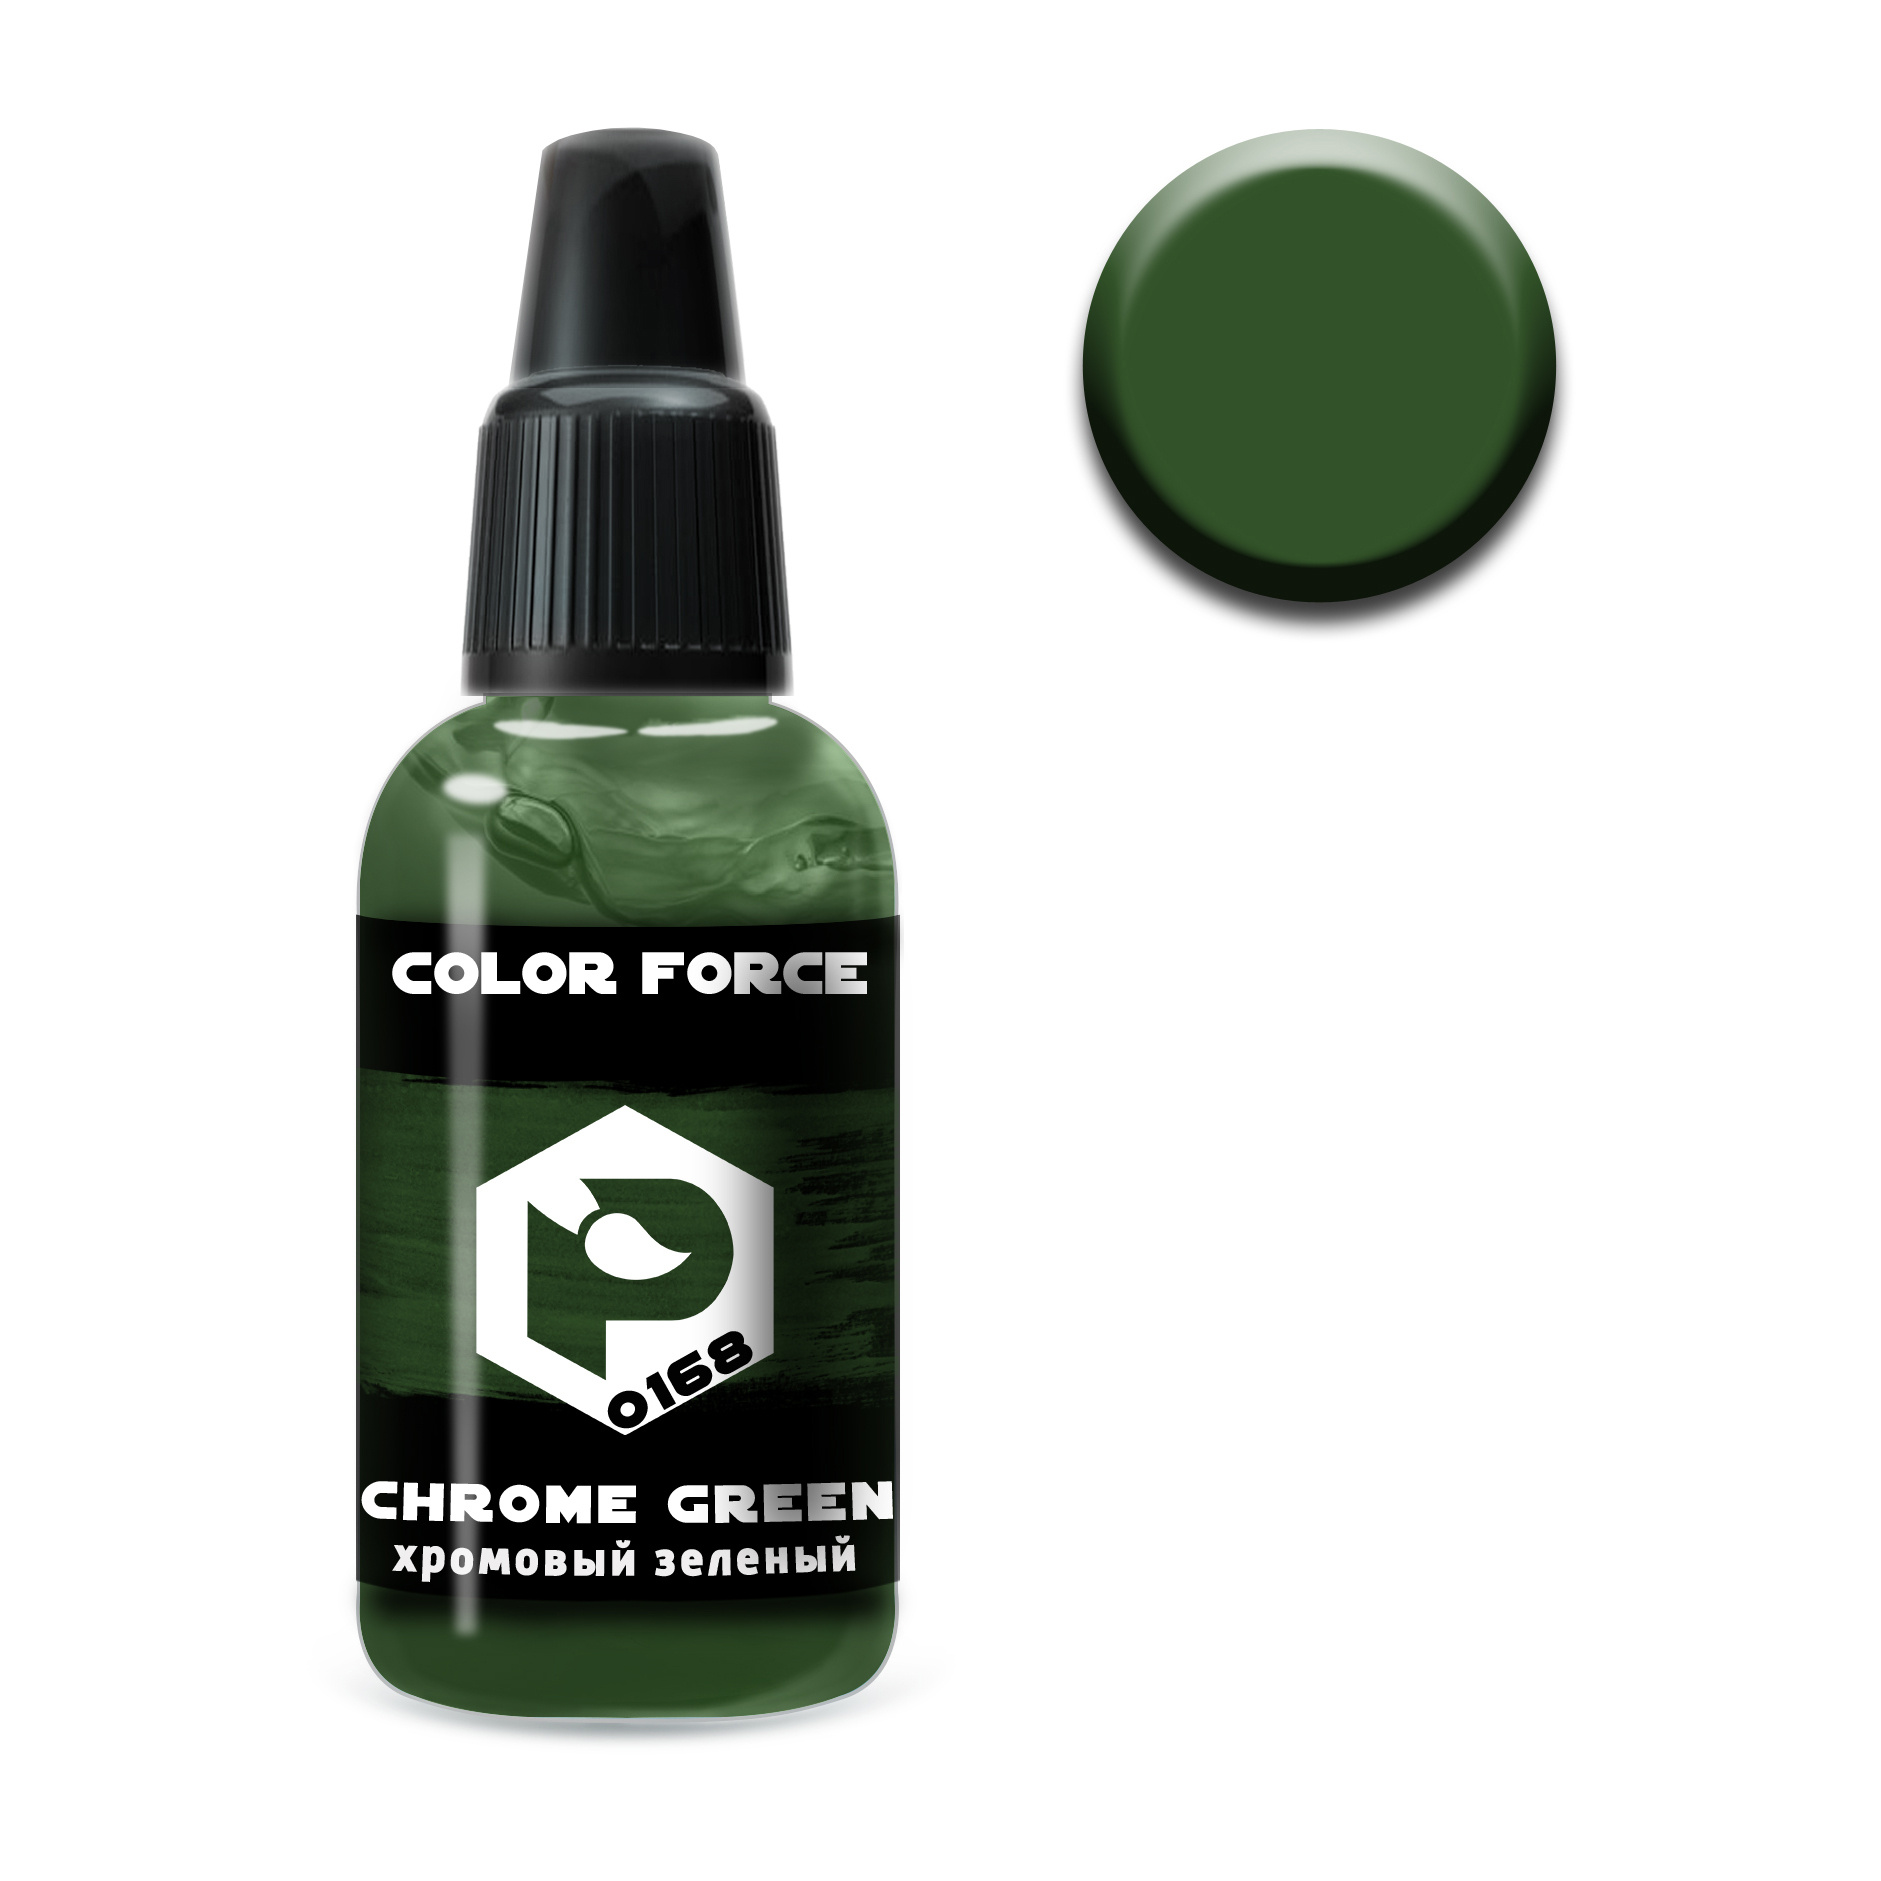 art.0168 Pacific88 airbrush Paint Chrome green (Chrome green)